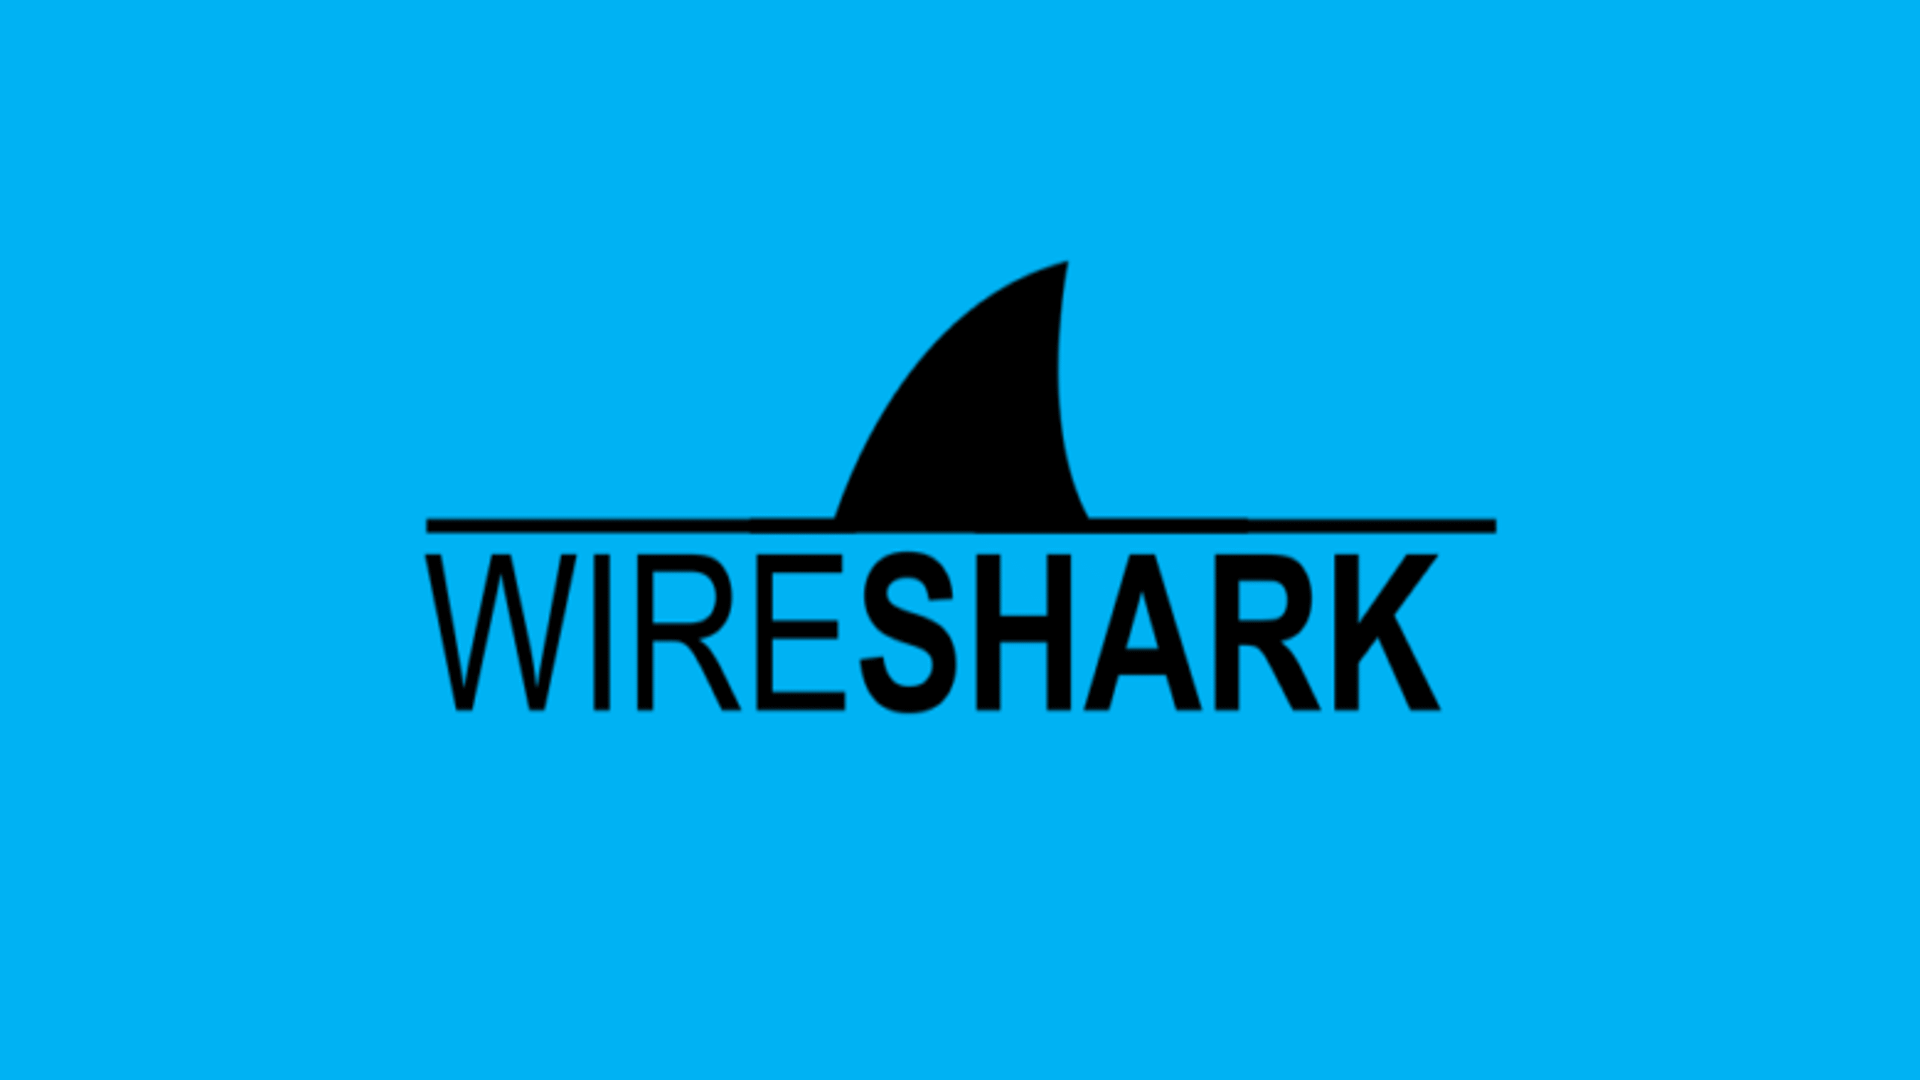 WireShark popular penetration testing tool